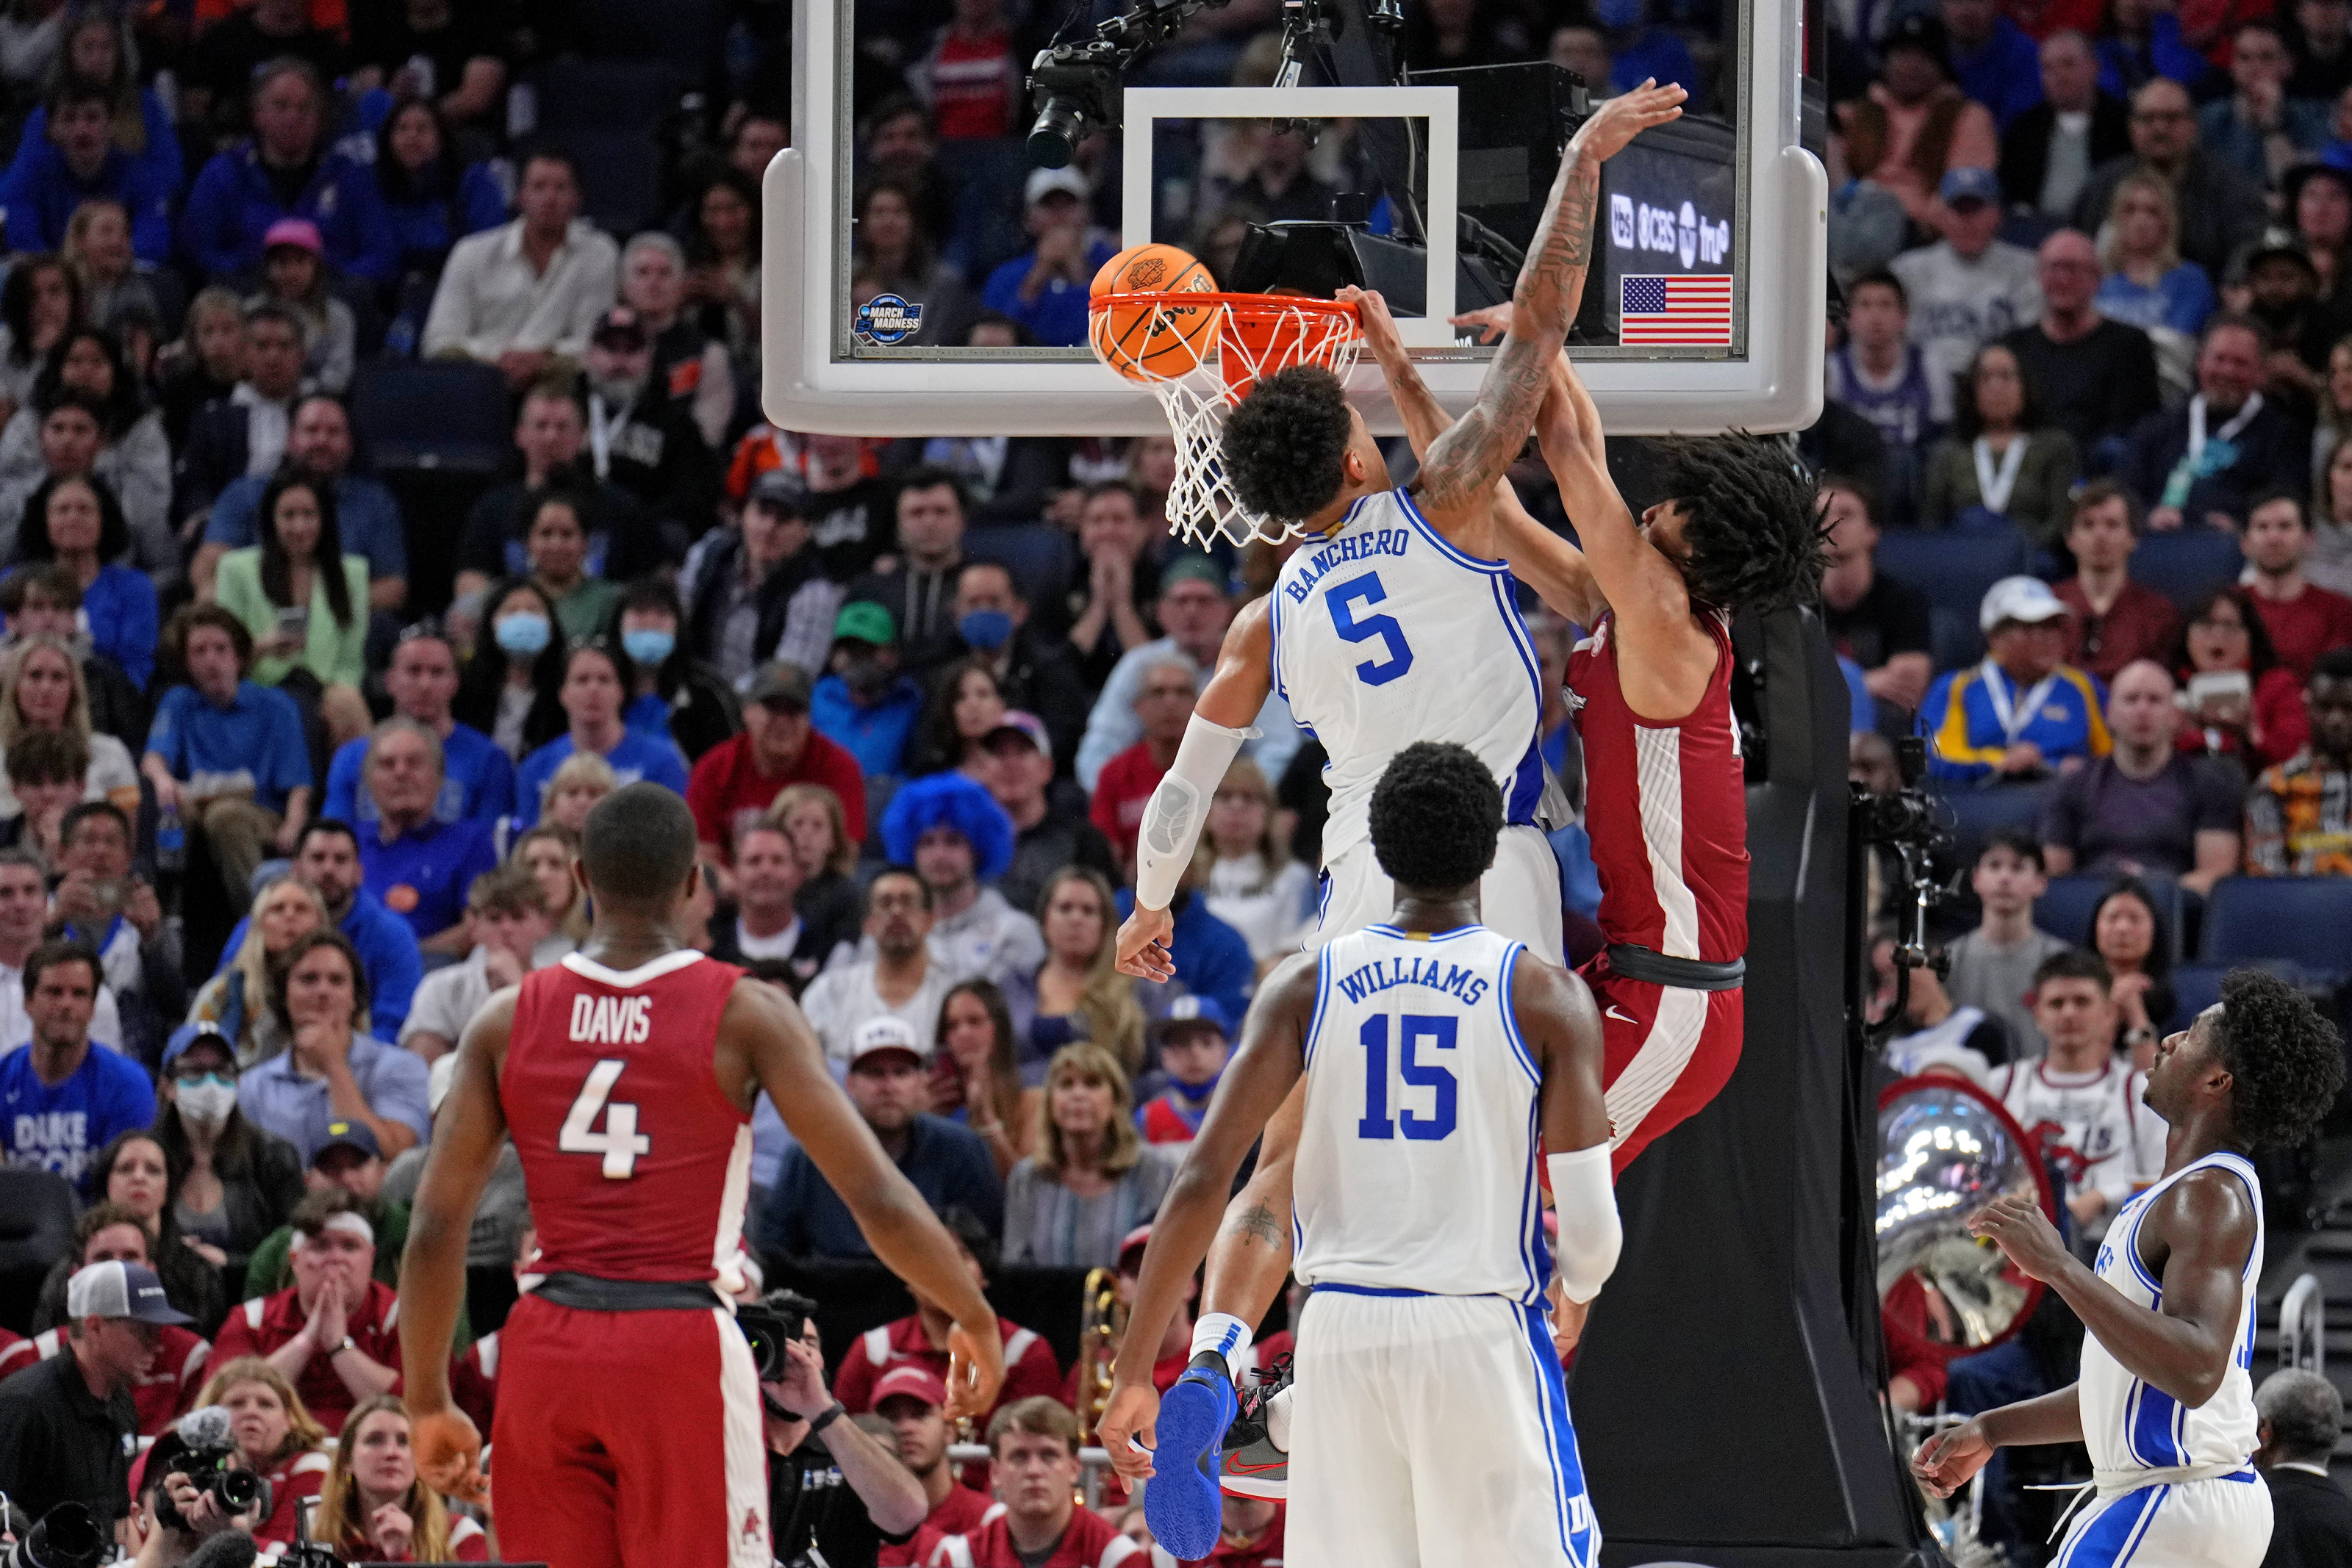 Duke's Williams entering NBA draft after sophomore season